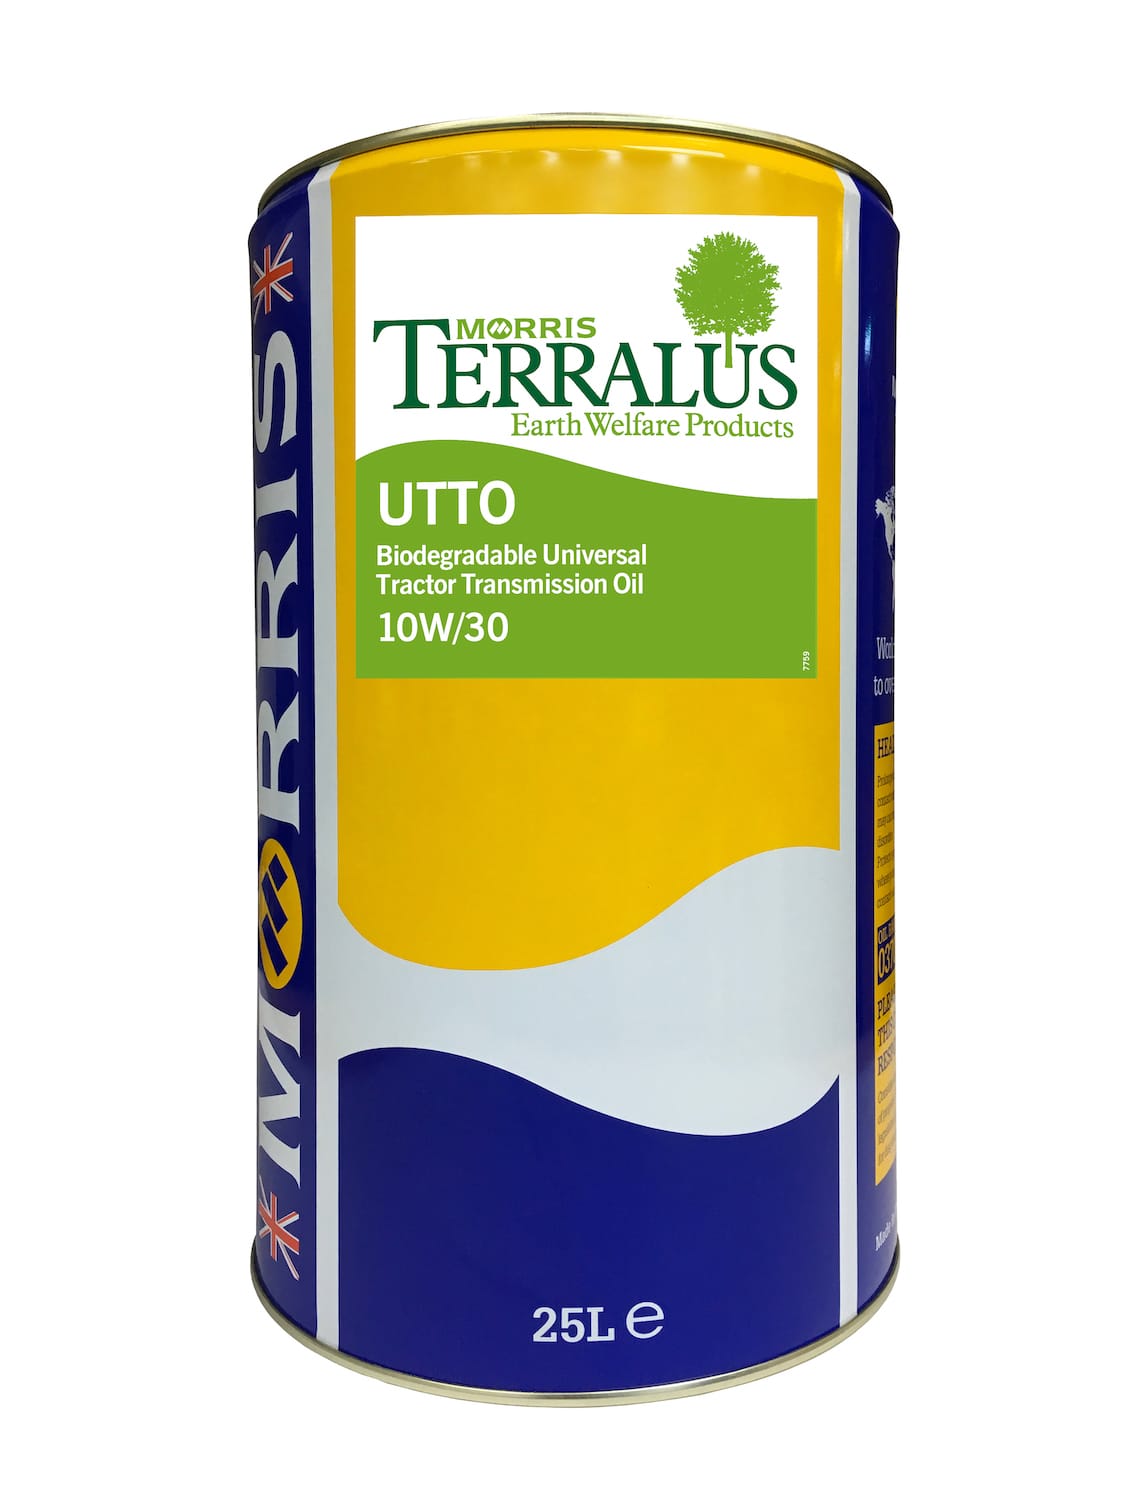 Terralus UTTO